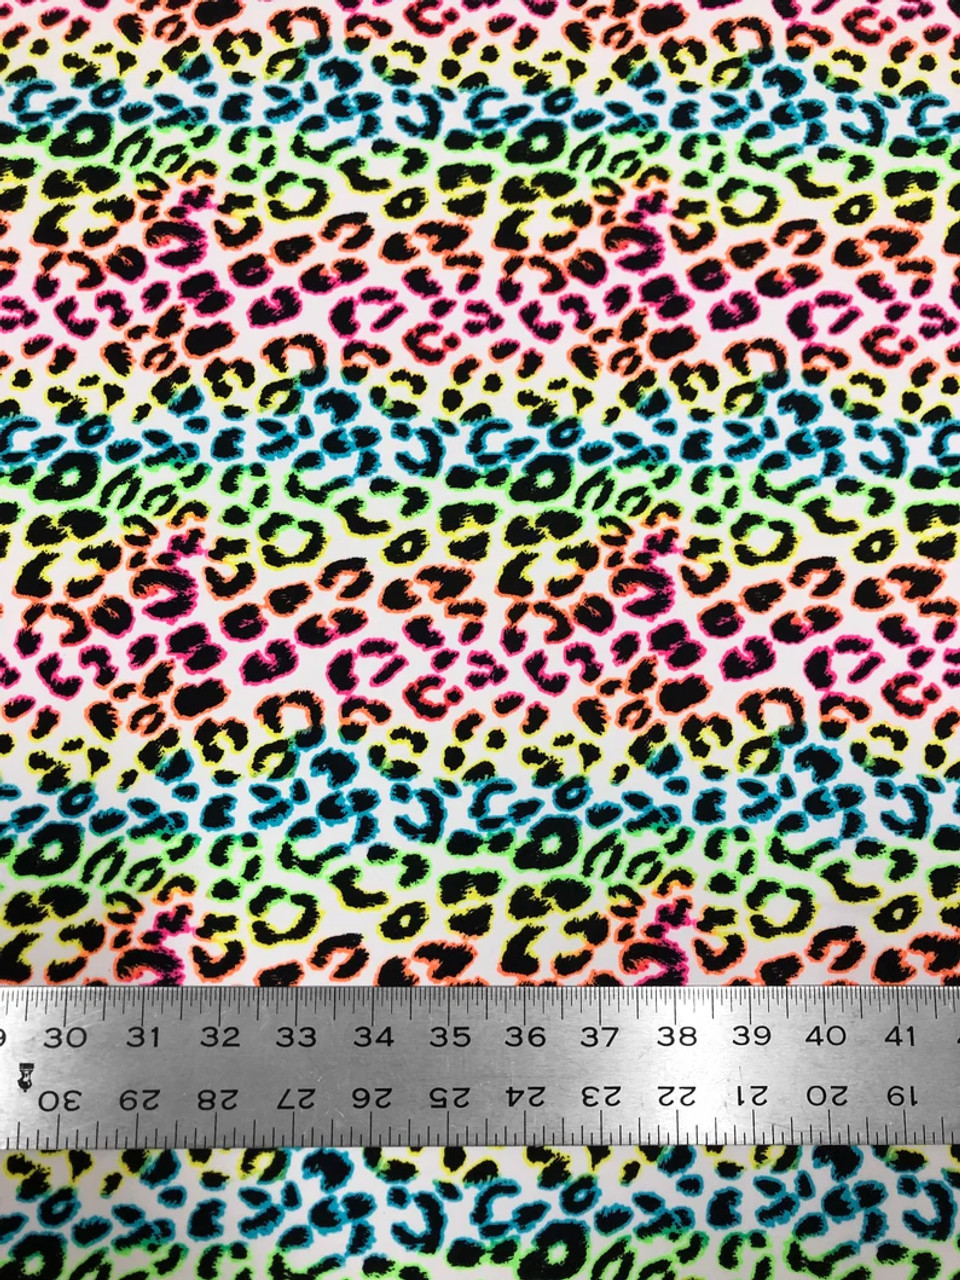 15,287 Rainbow Leopard Print Images, Stock Photos, 3D objects